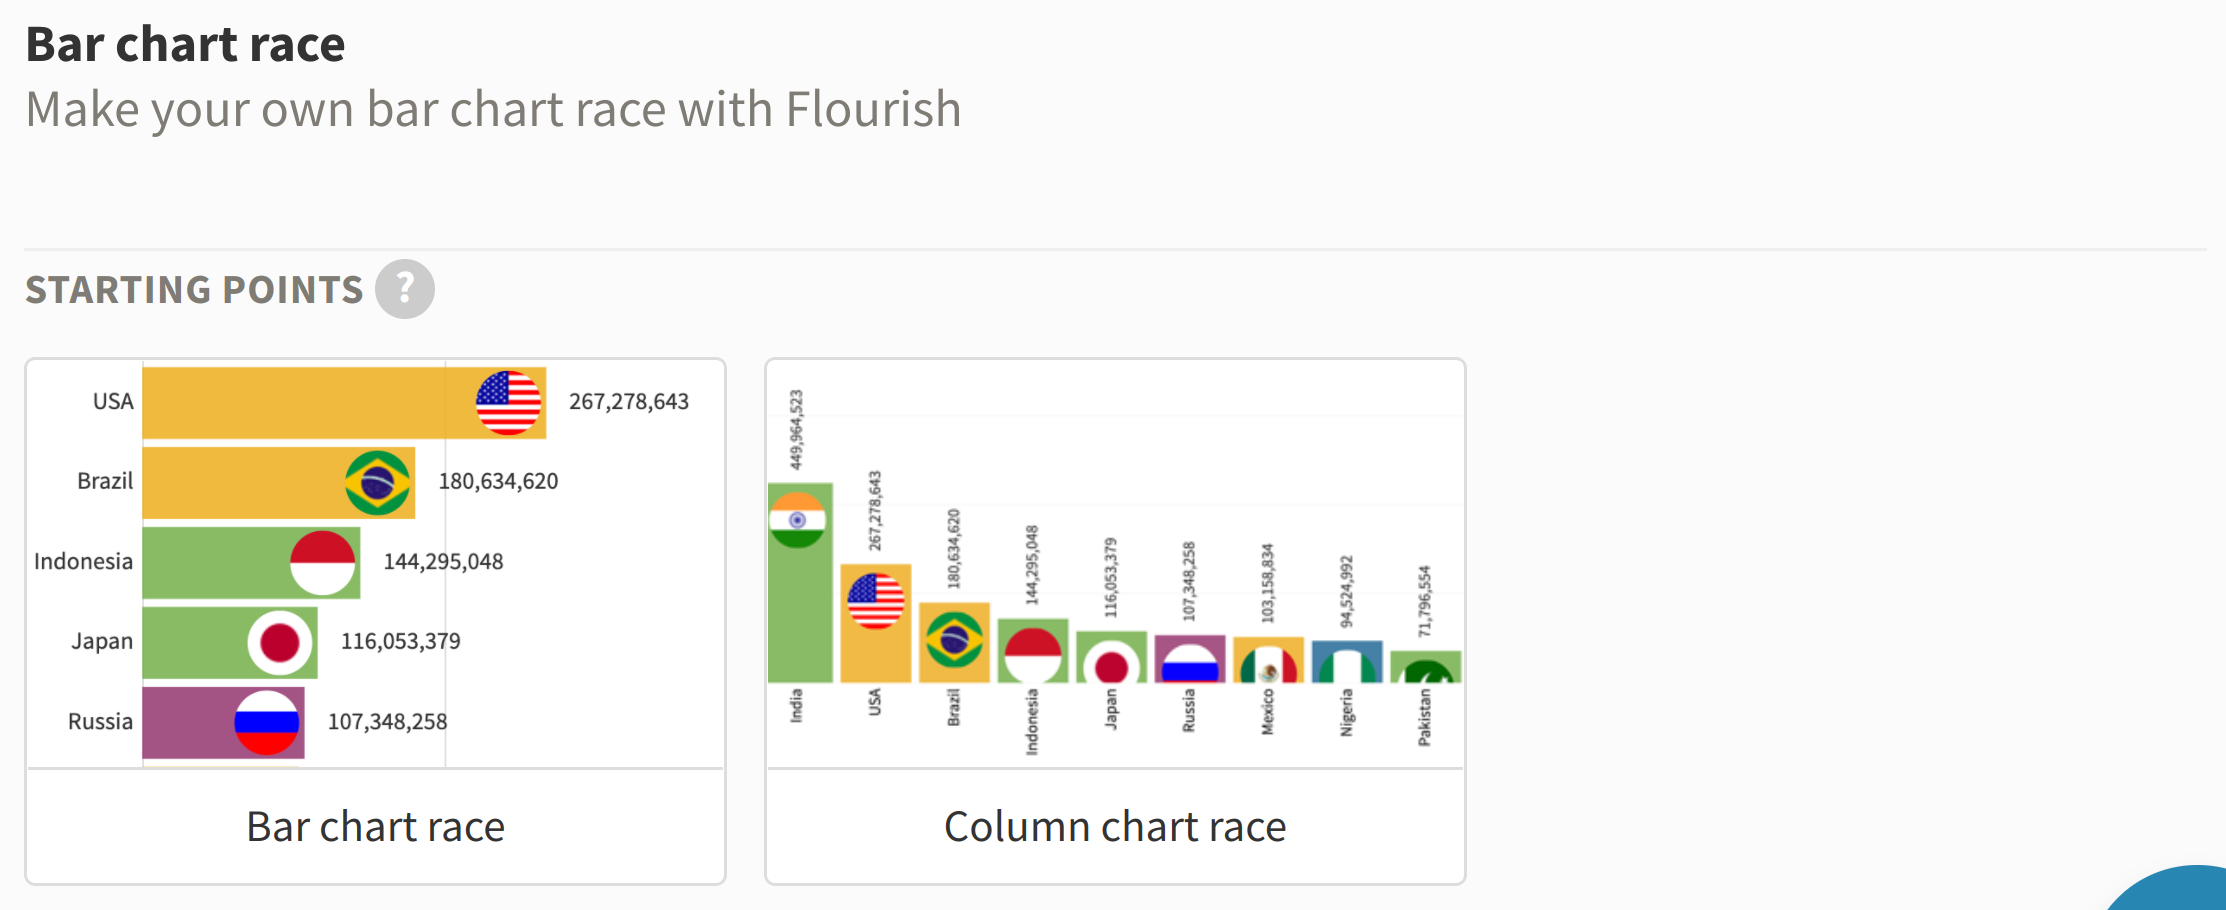 Selecting the Bar chart race option in Flourish